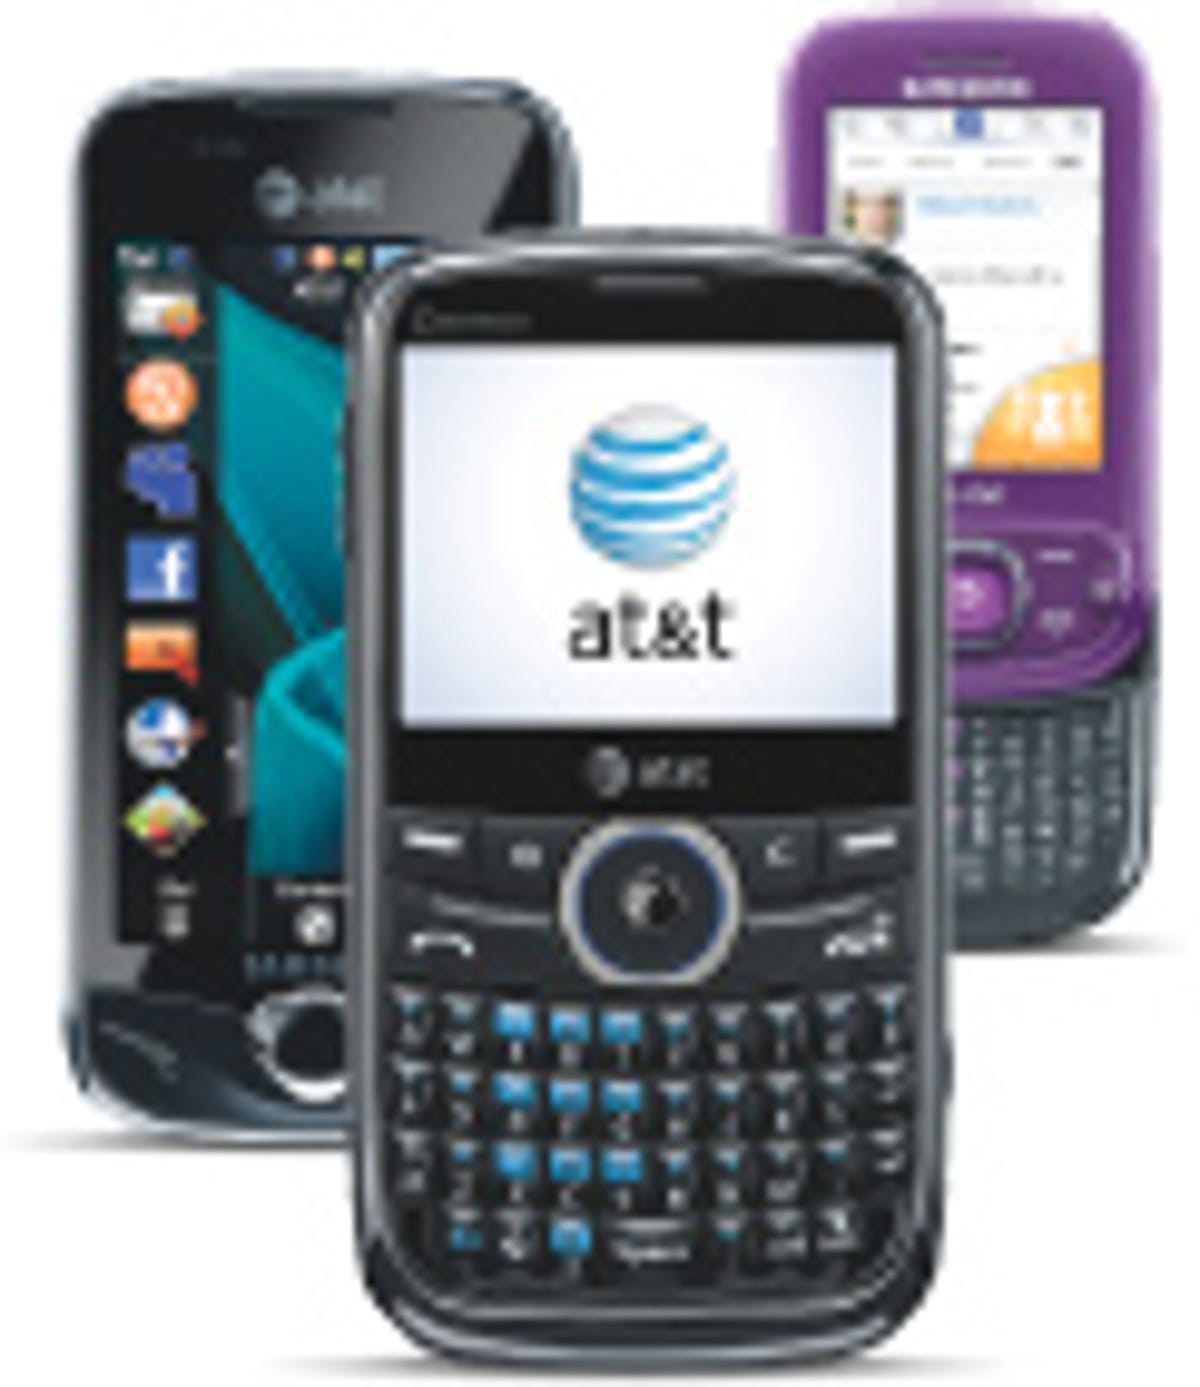 AT&amp;T messaging phones